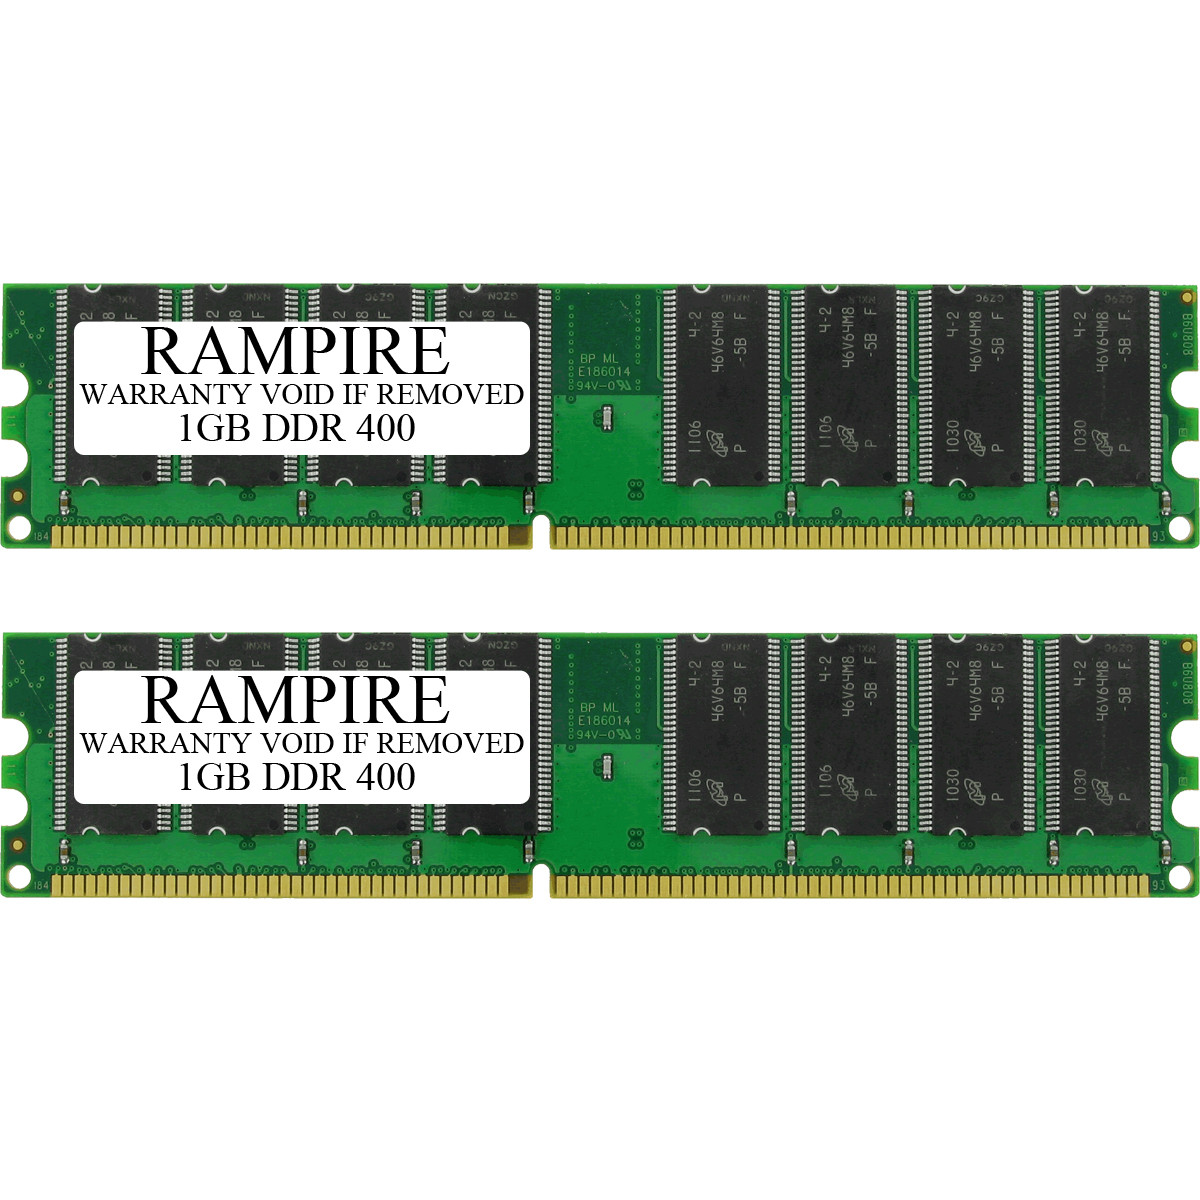 RAMPIRE 2GB (2 x 1GB) DDR 400 (PC 3200) 184-Pin DDR SDRAM 2.5V 2Rx8 Non-ECC UDIMM Memory for Desktop PC